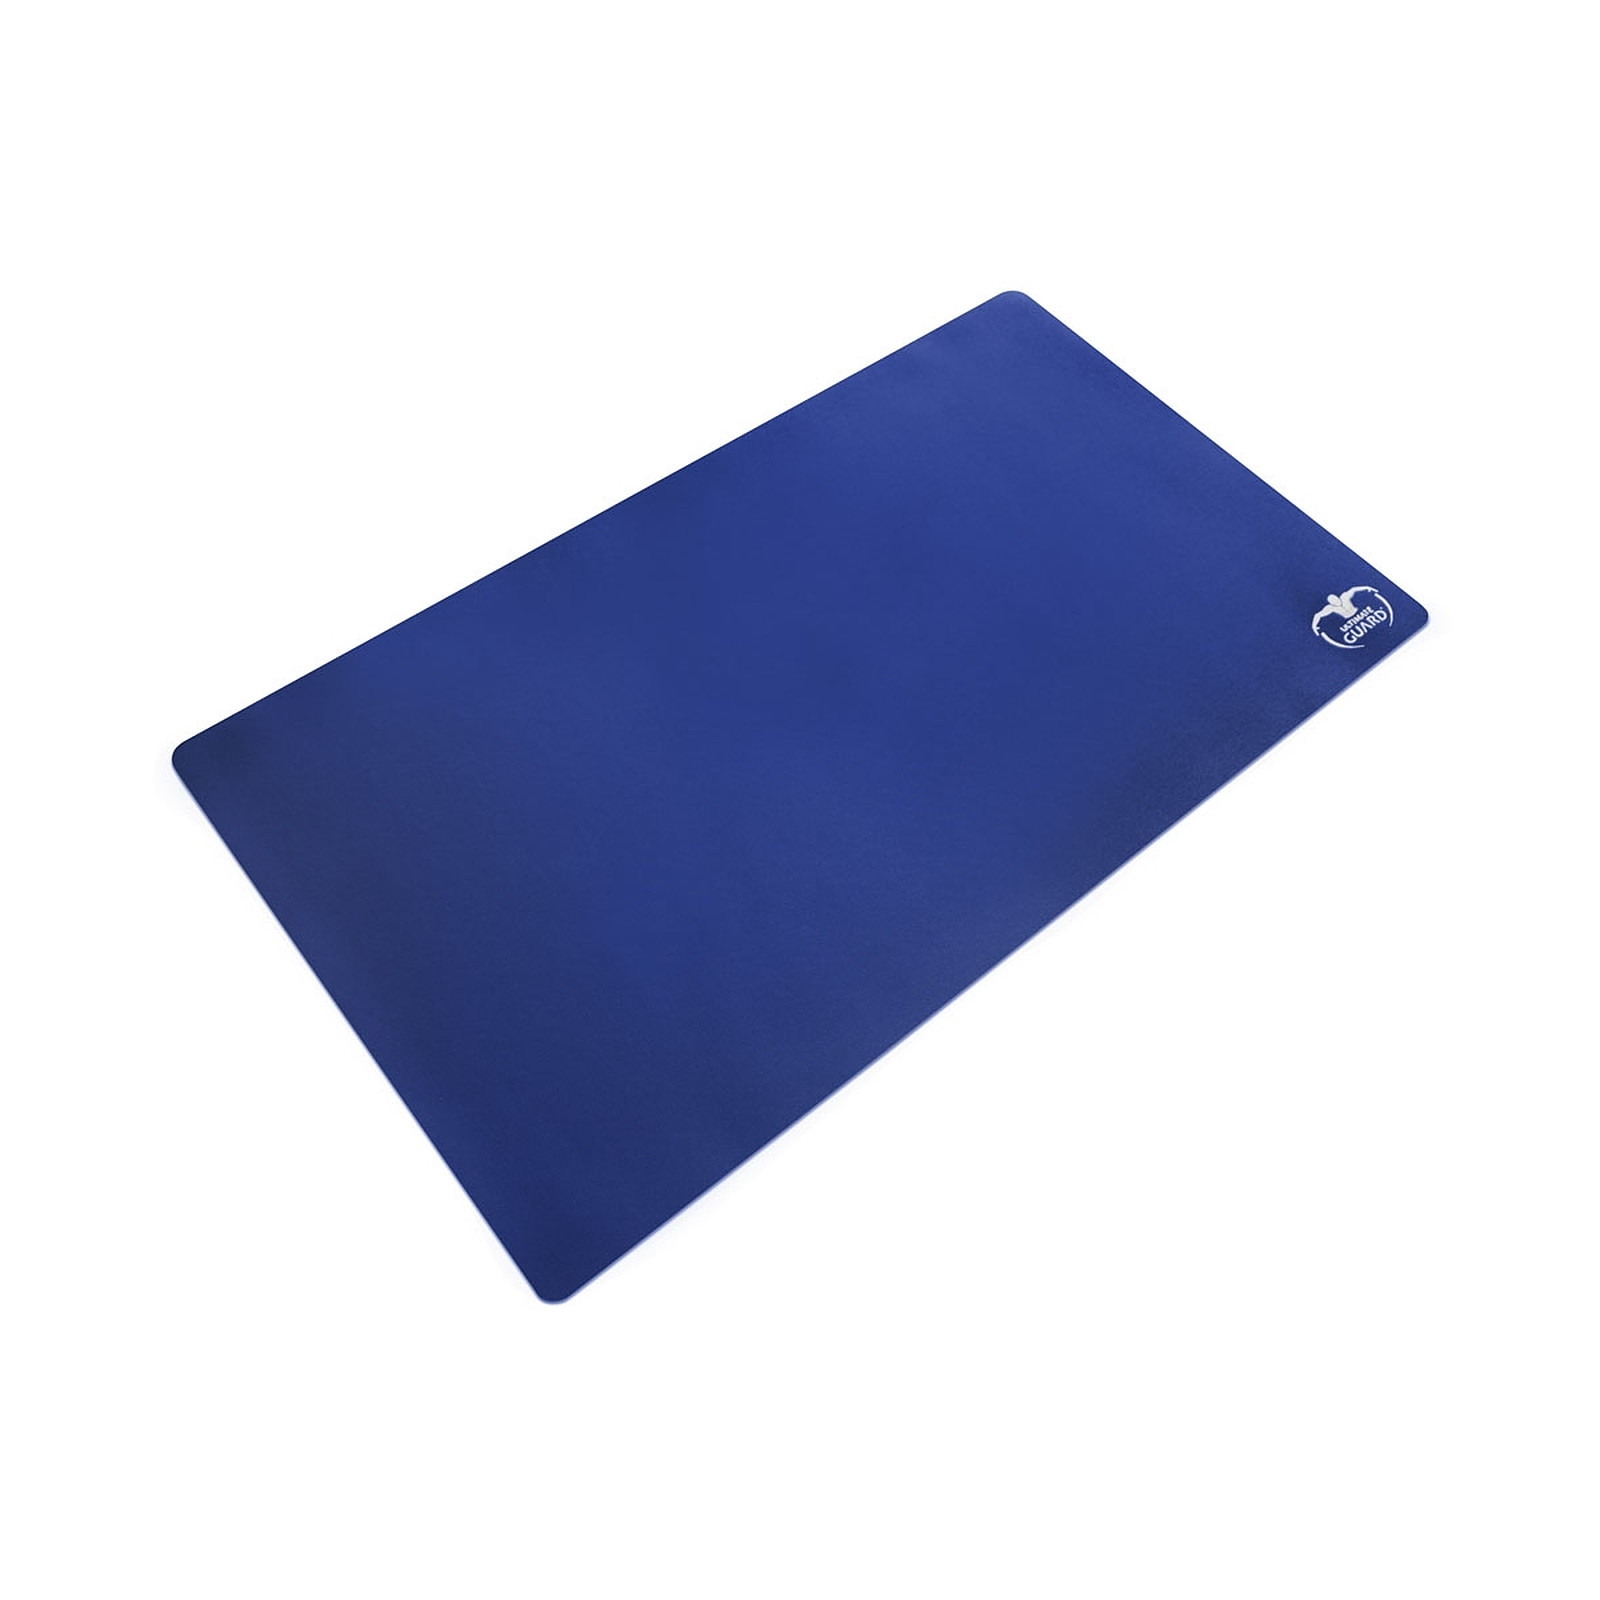 Ultimate Guard - Tapis de jeu Monochrome Bleu Marine 61 x 35 cm - Accessoire jeux Ultimate Guard